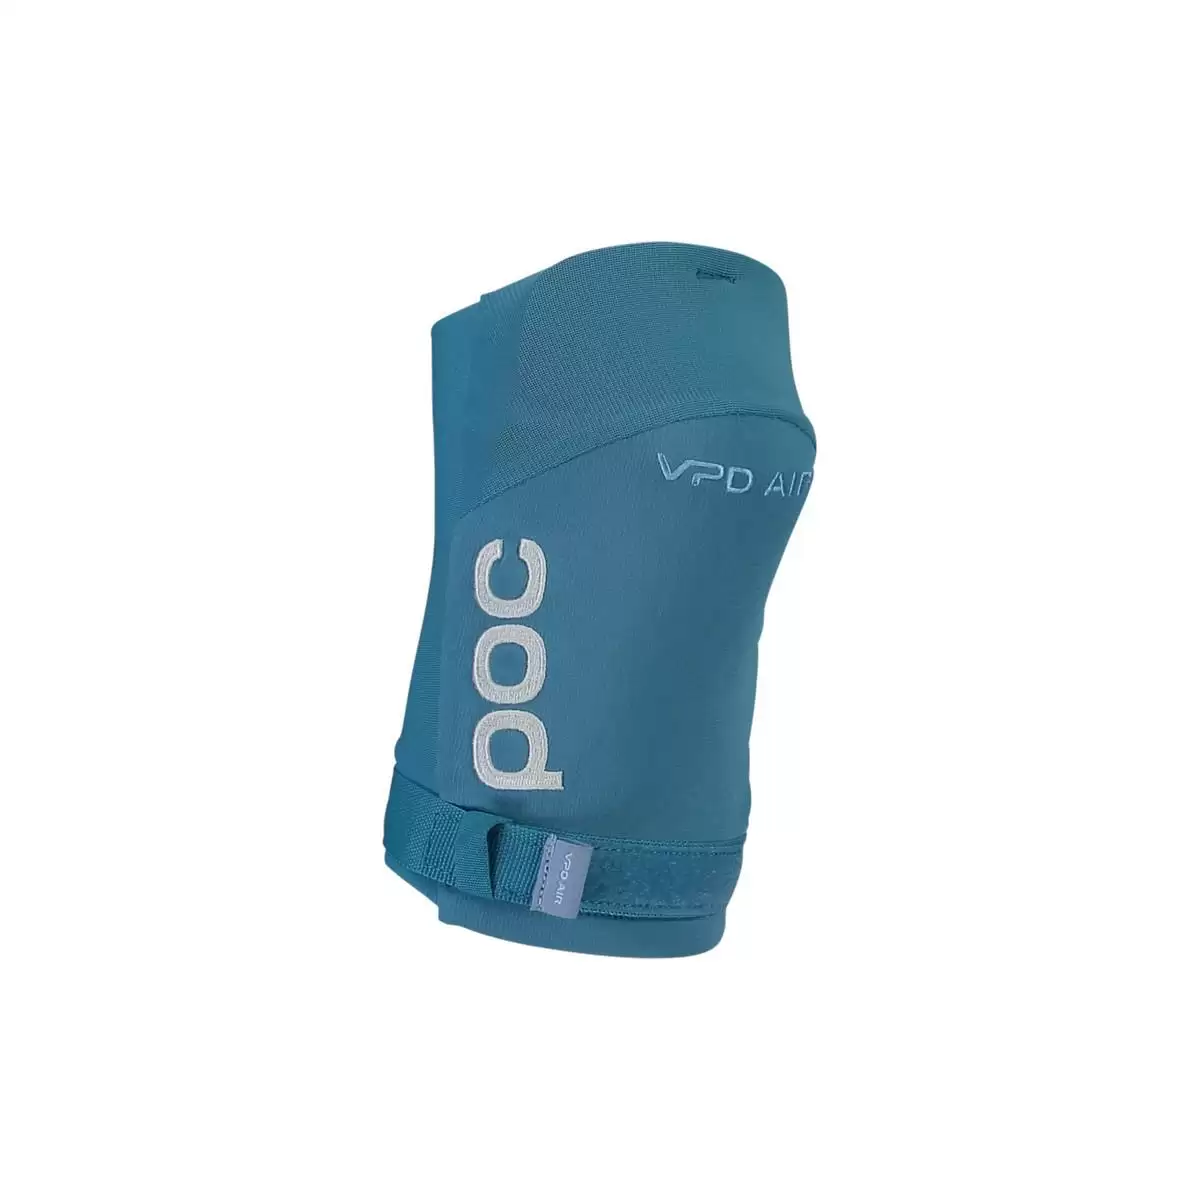 Joint VPD Air Elbow Protectors Basalt Blue Size XL - image